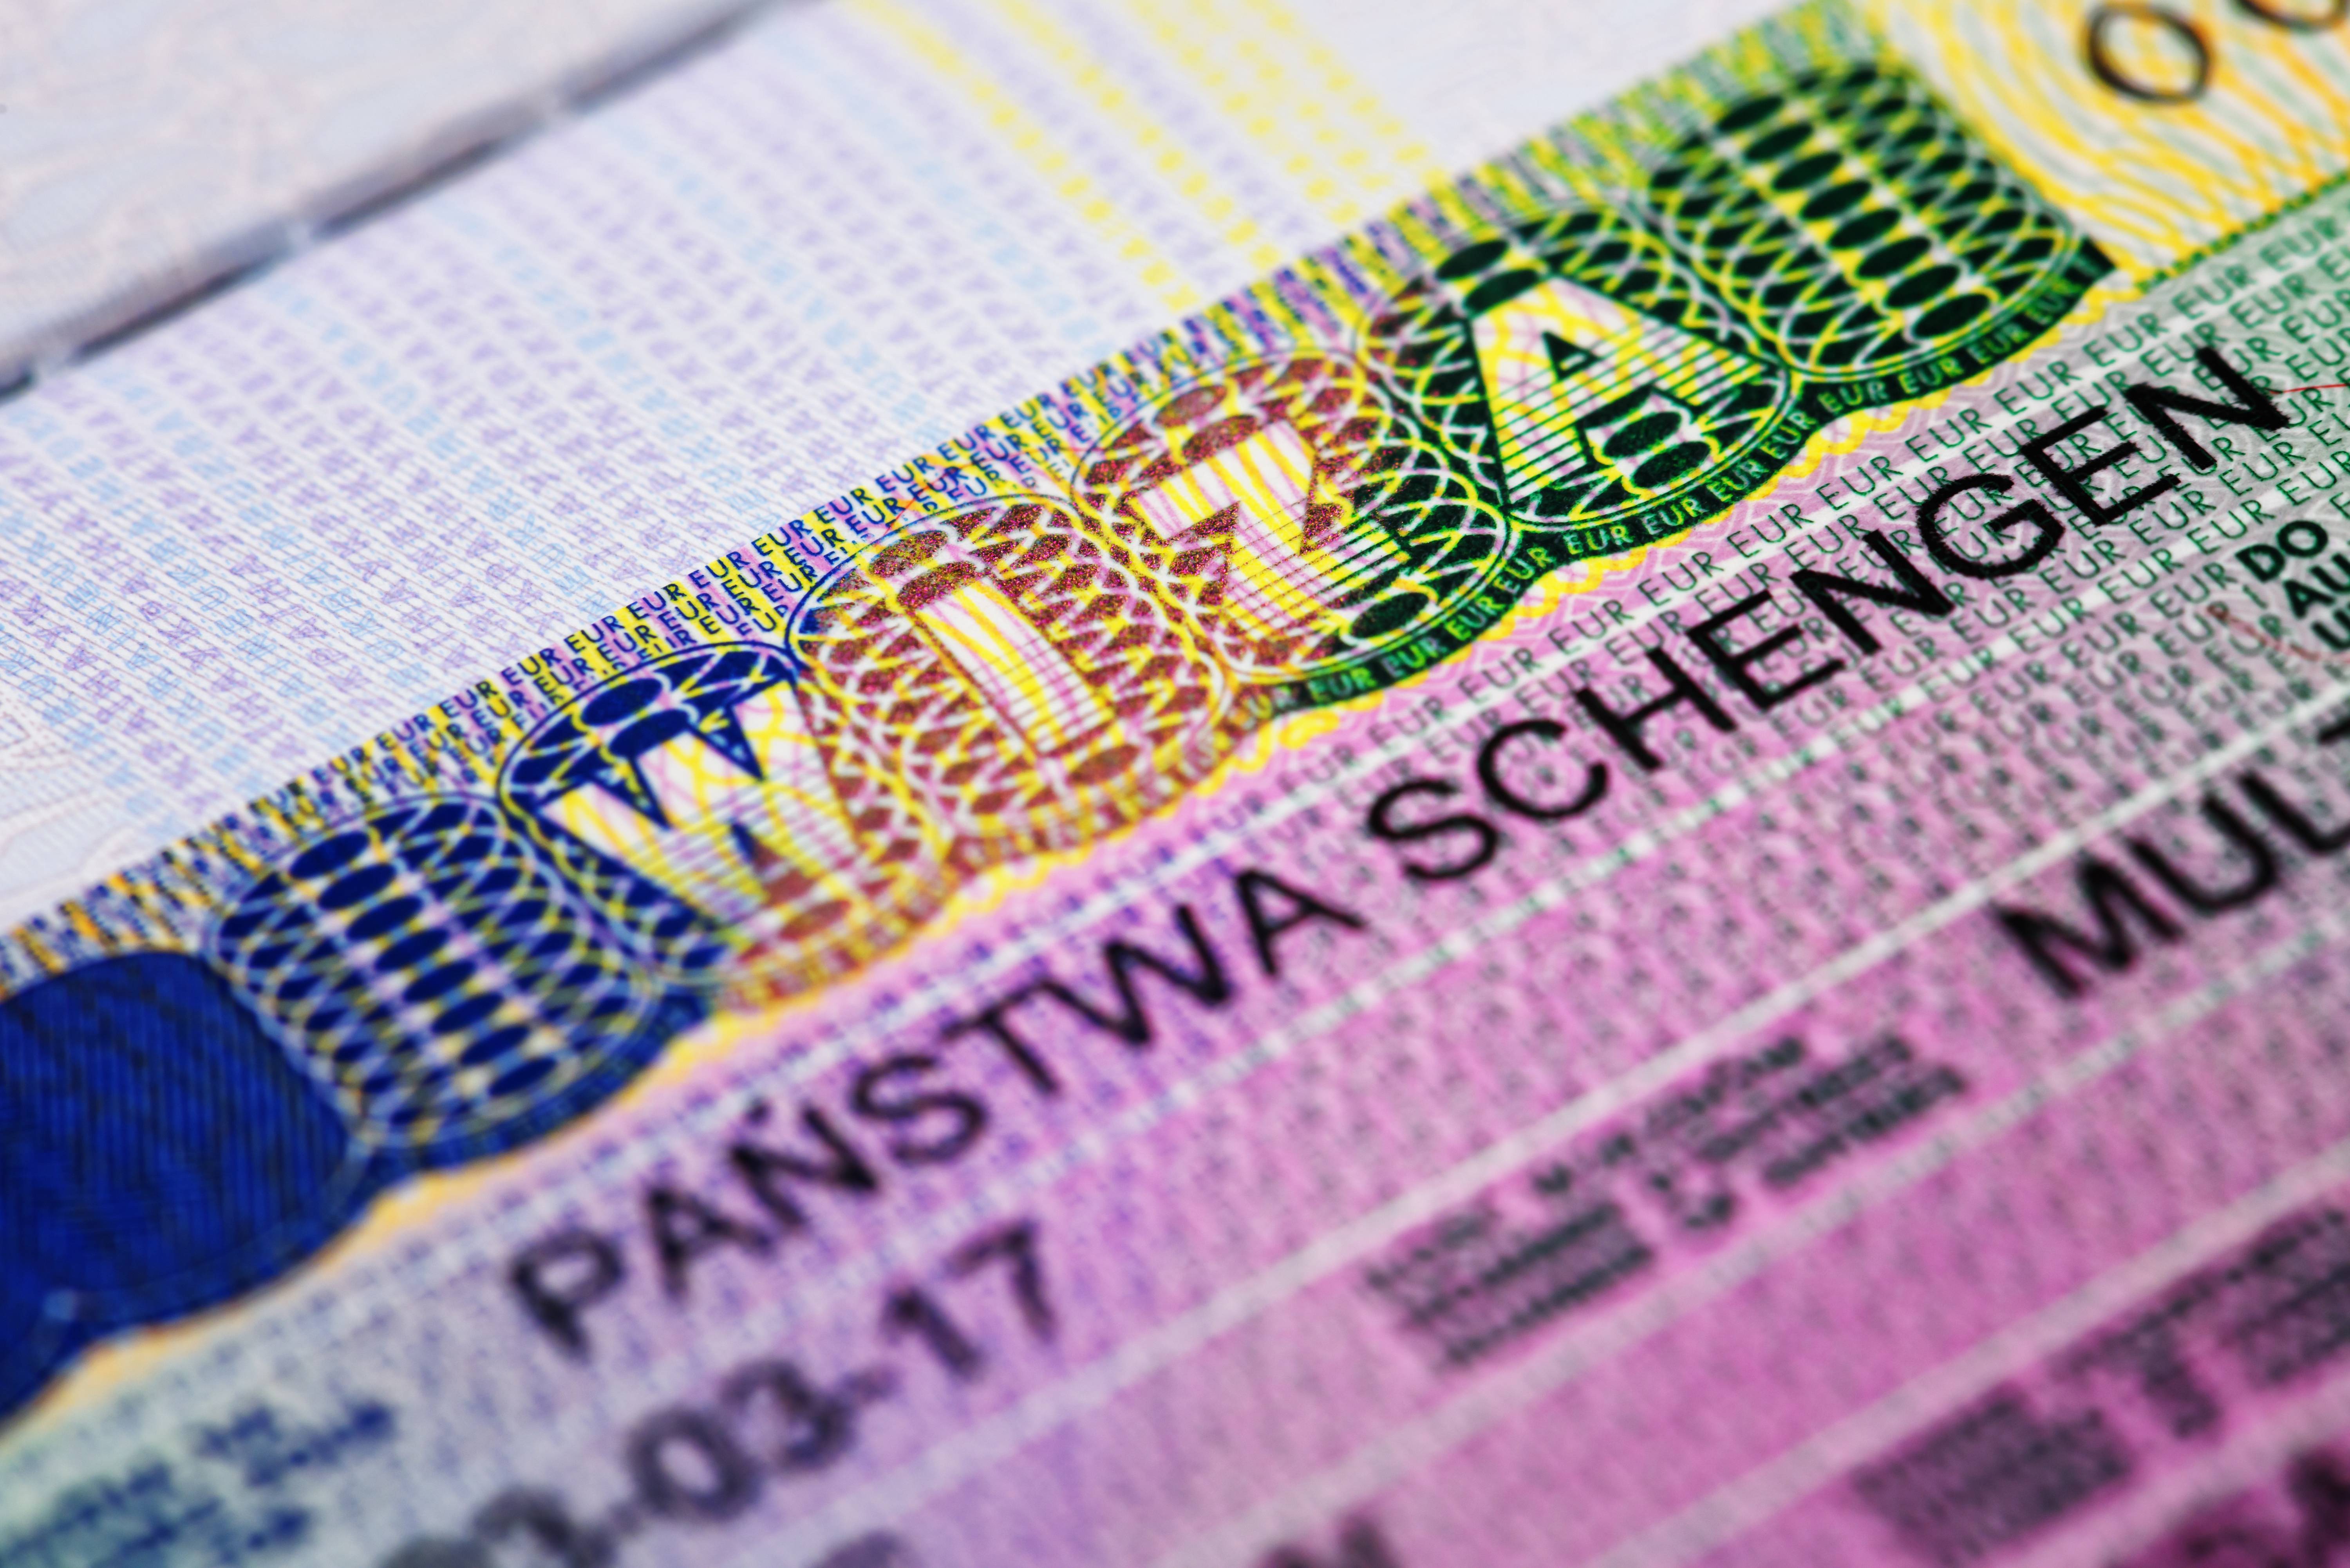 Страны выдающие шенгенские визы. Виза шенген. Польская шенгенская виза. Польская виза шенген. Шенгенская мультивиза.